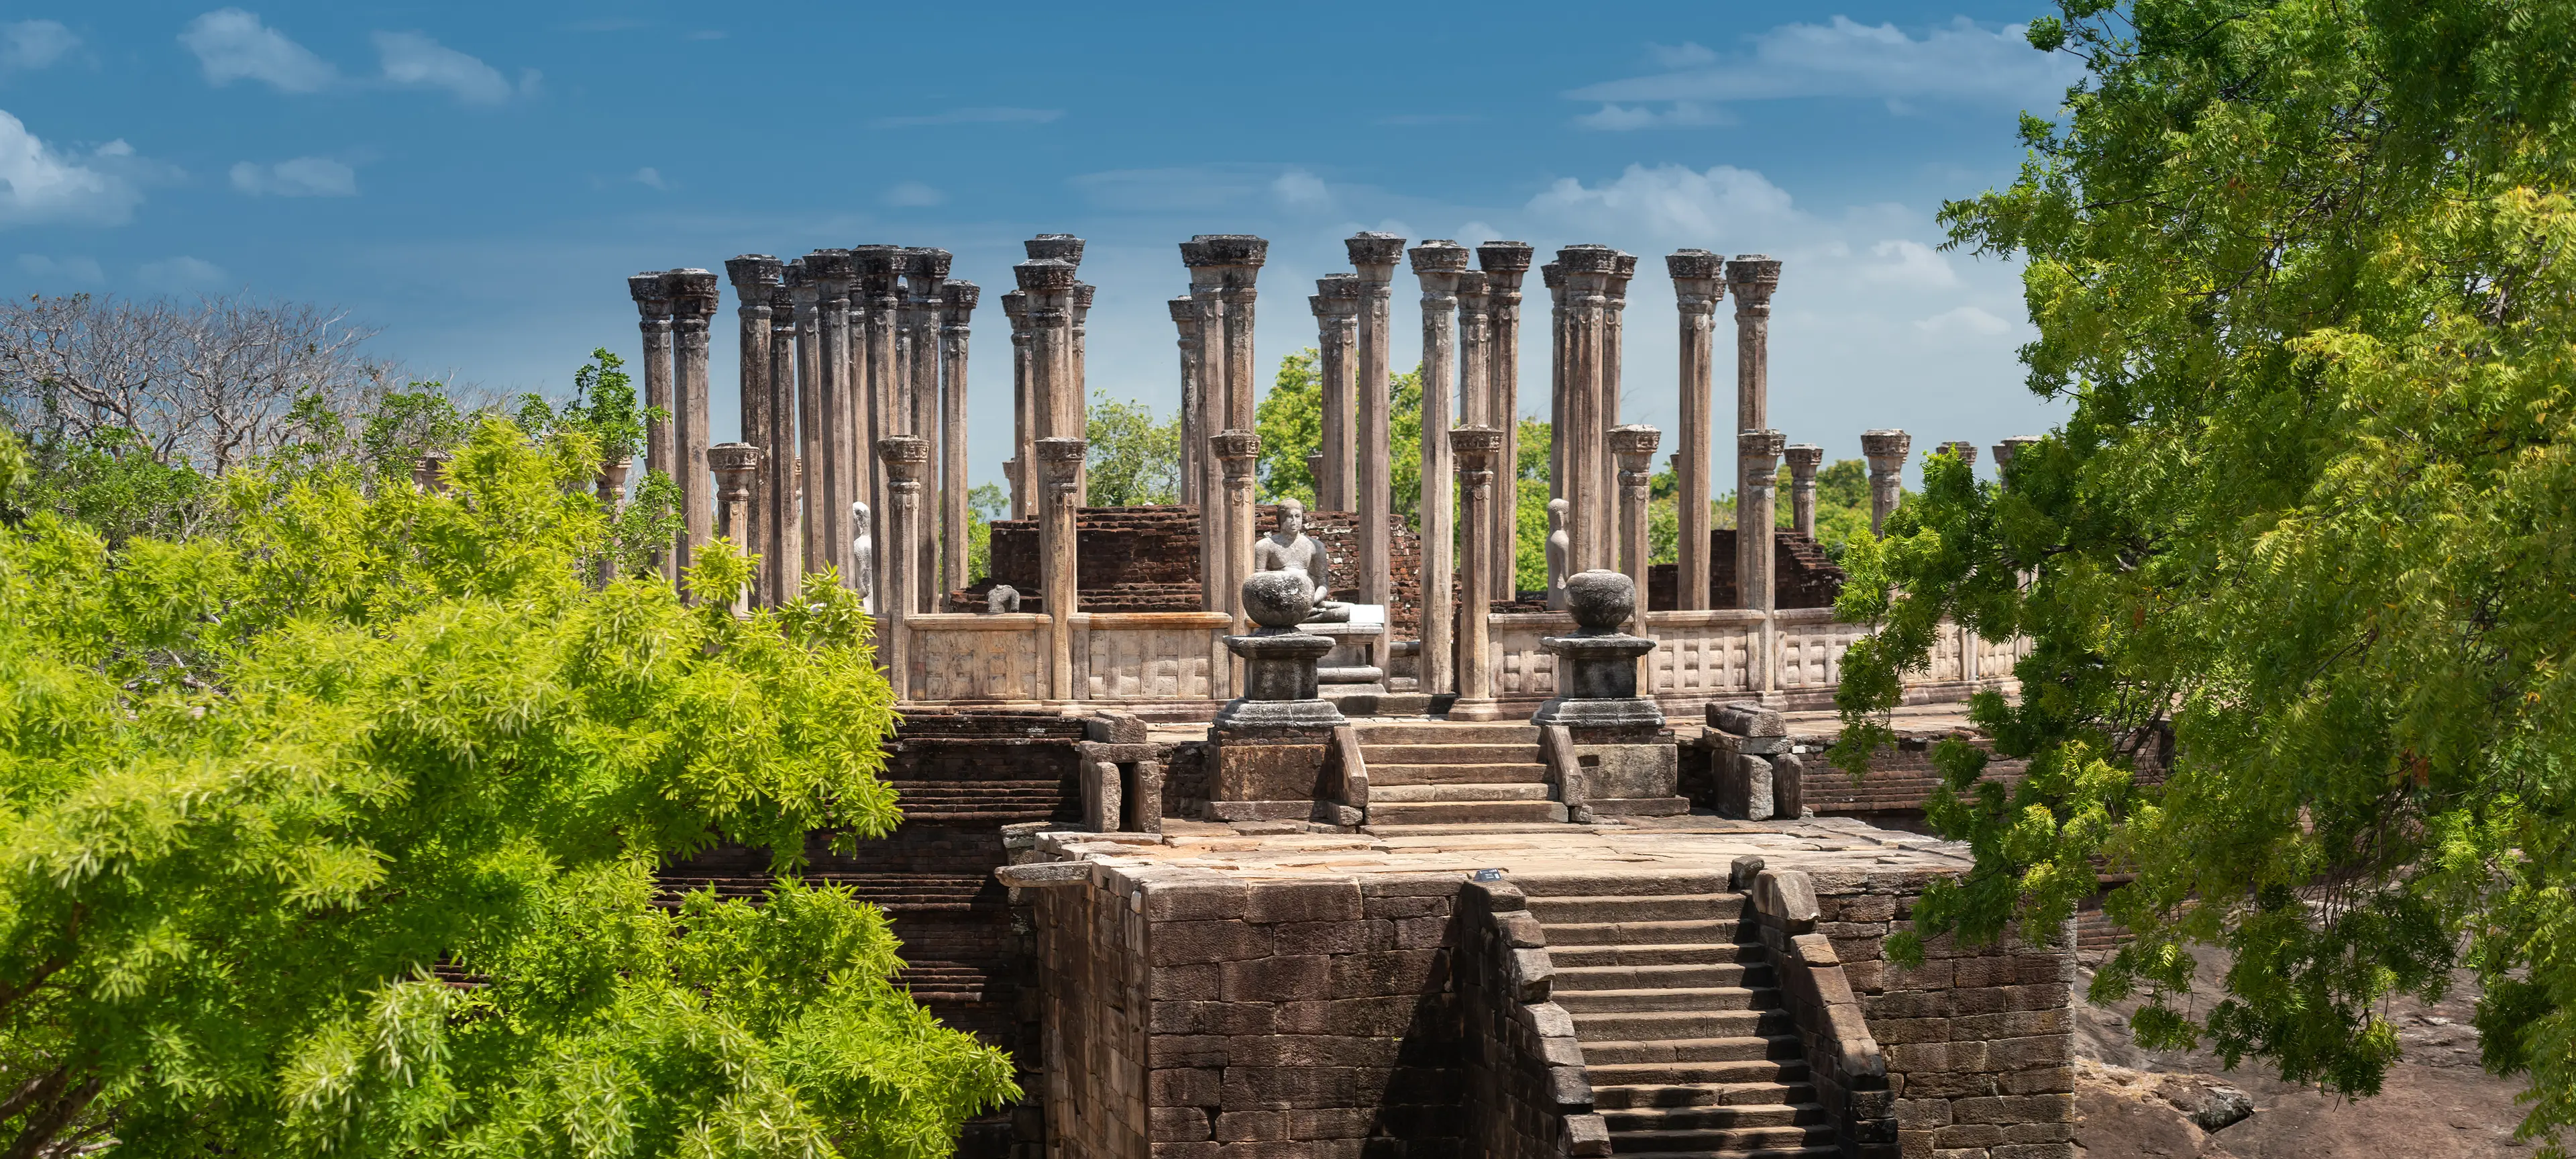 Ancient city of Polonnaruwa